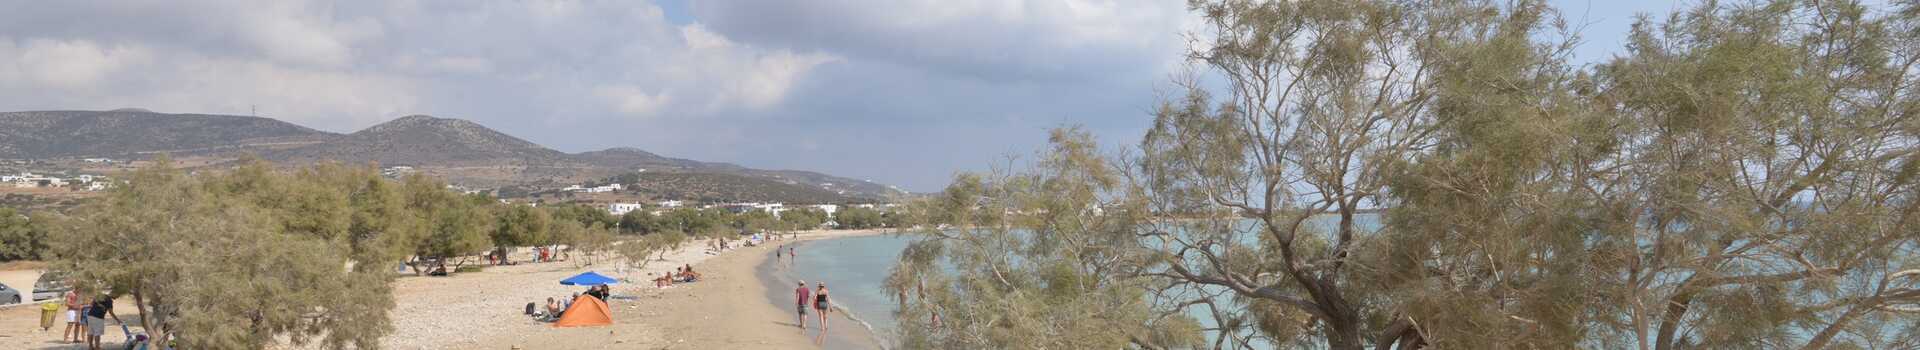 Řecko, Paros, Pláž Piso Aliki